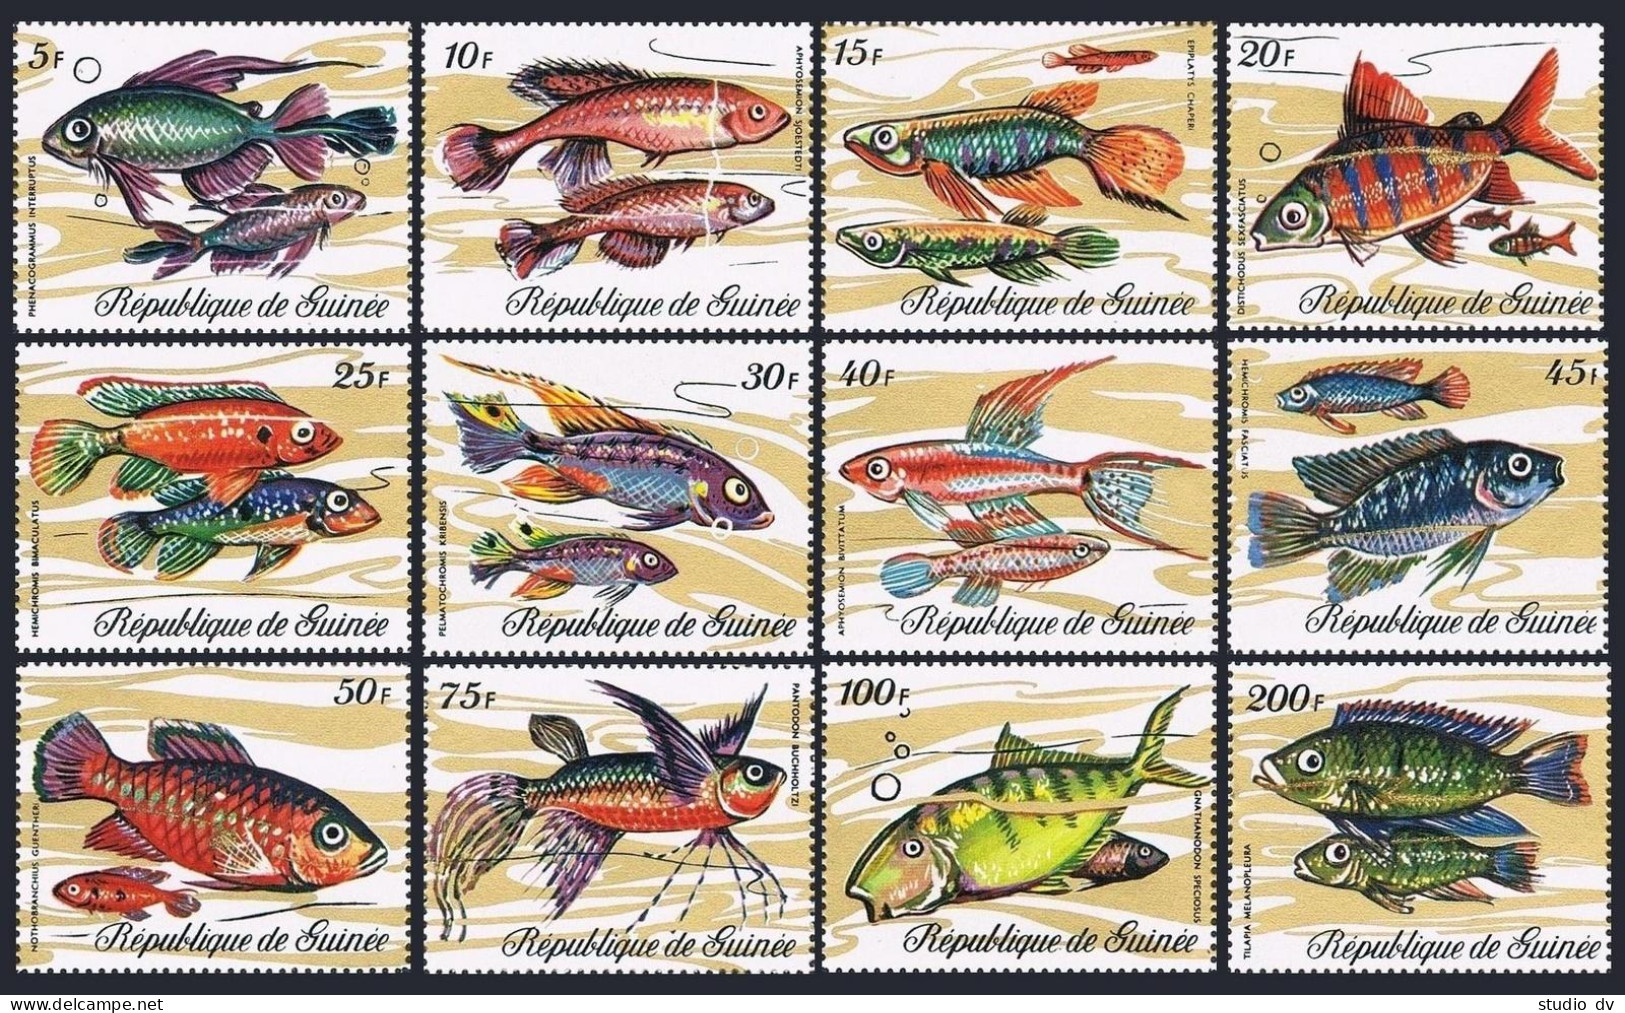 Guinea 570-581 Sheets Of 10,MNH.Michel 571-582. Various Fish Of Guinea,1971. - Guinea (1958-...)